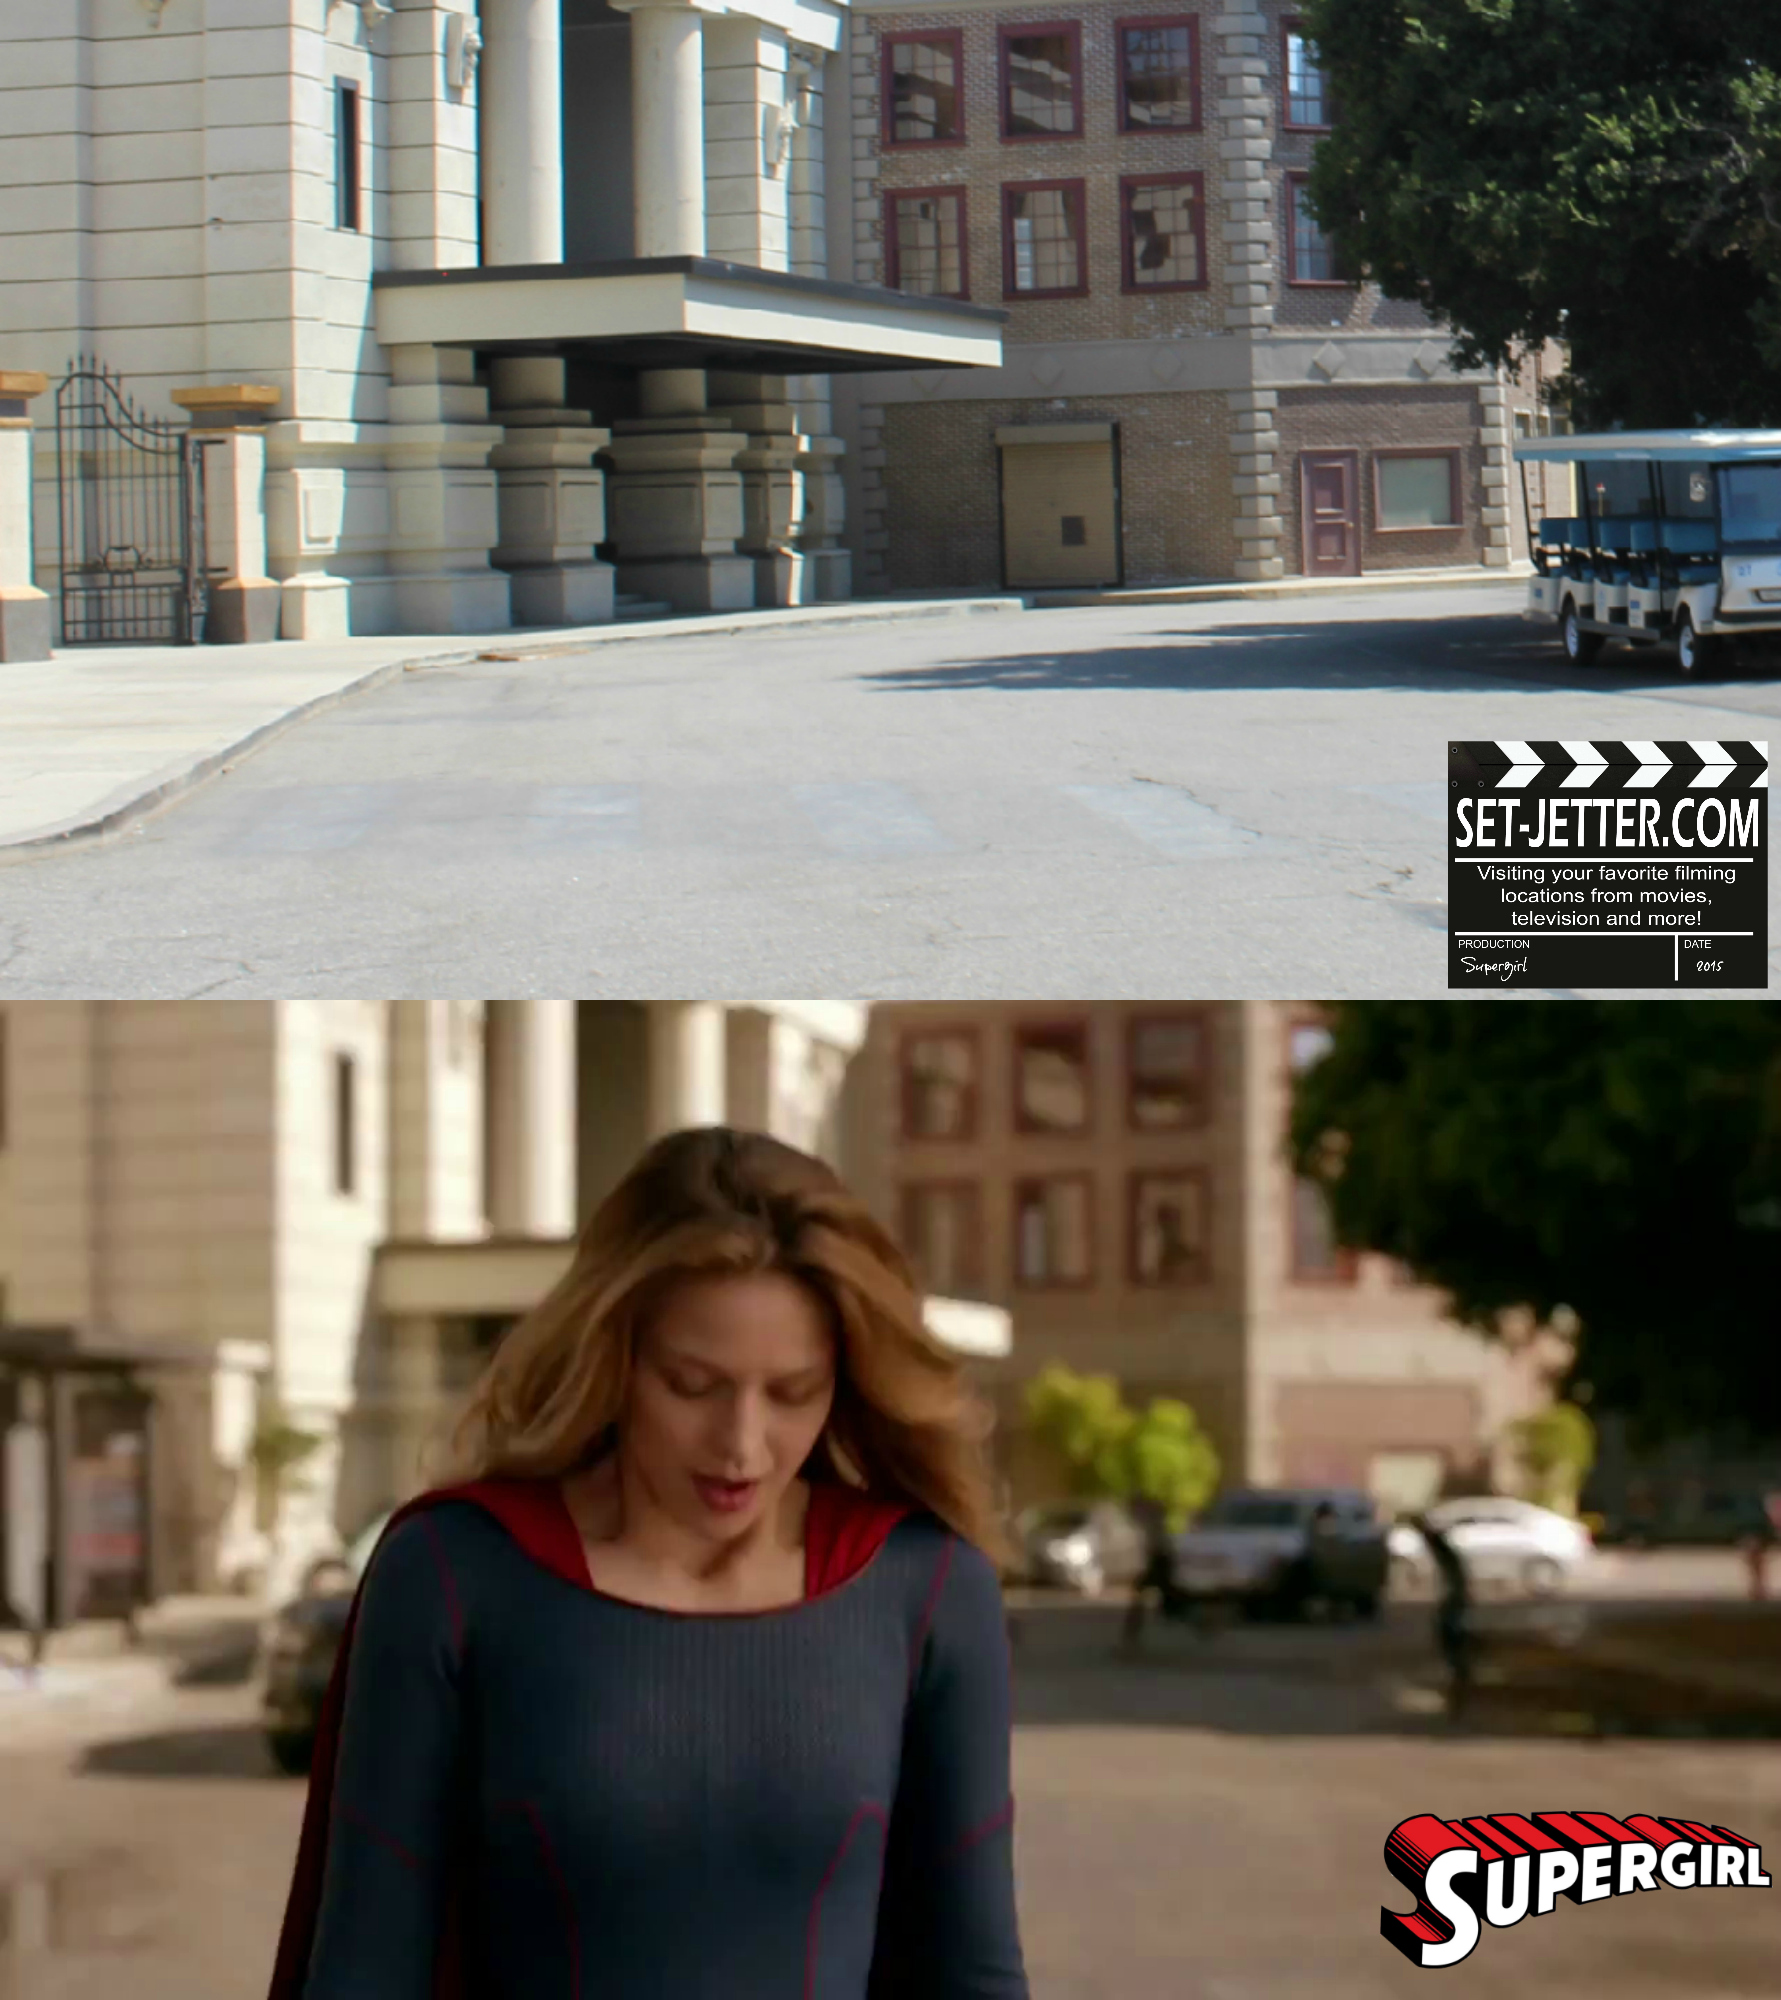 Supergirl comparison 26.jpg